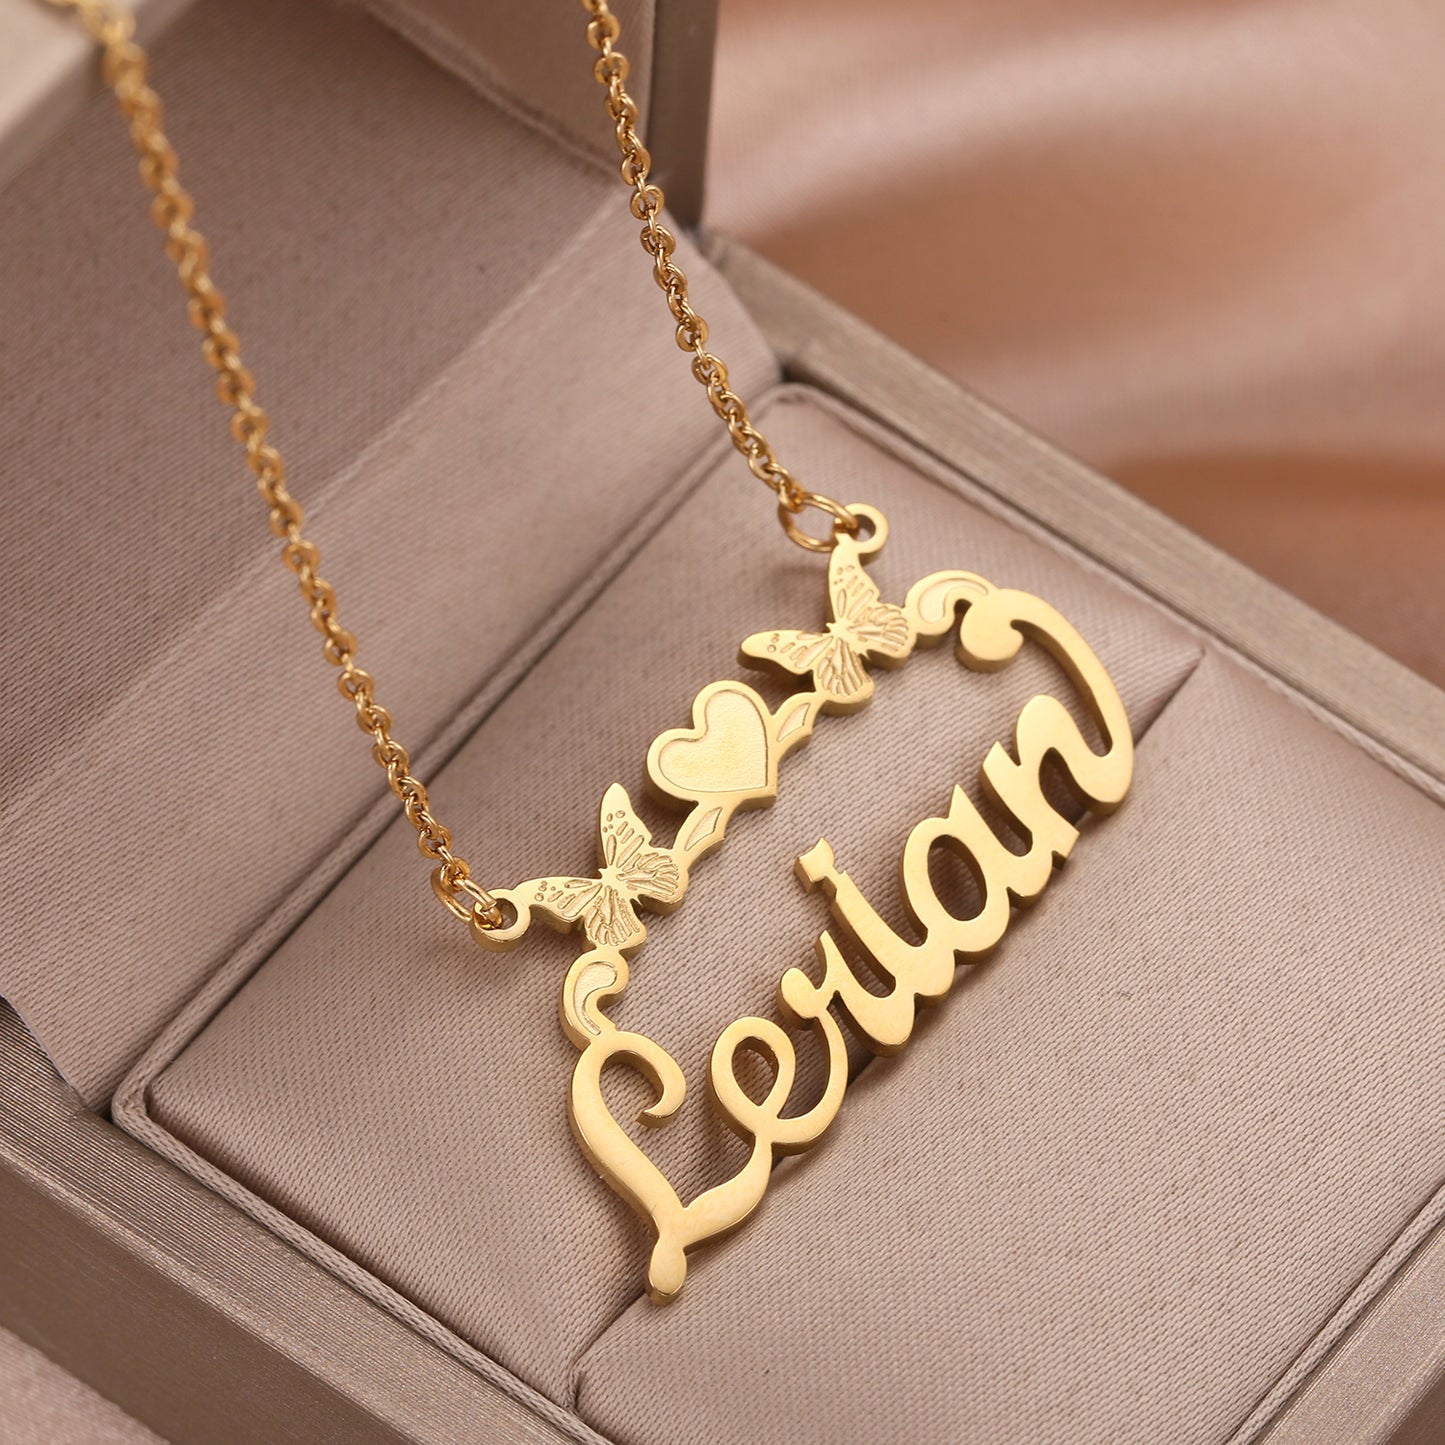 Personalised Bespoke Girls Single Name Necklace - Butterflies Hearts Ribbon - Baby Kids Jewellery Arabic English - Gift Birthday  - AMELIA